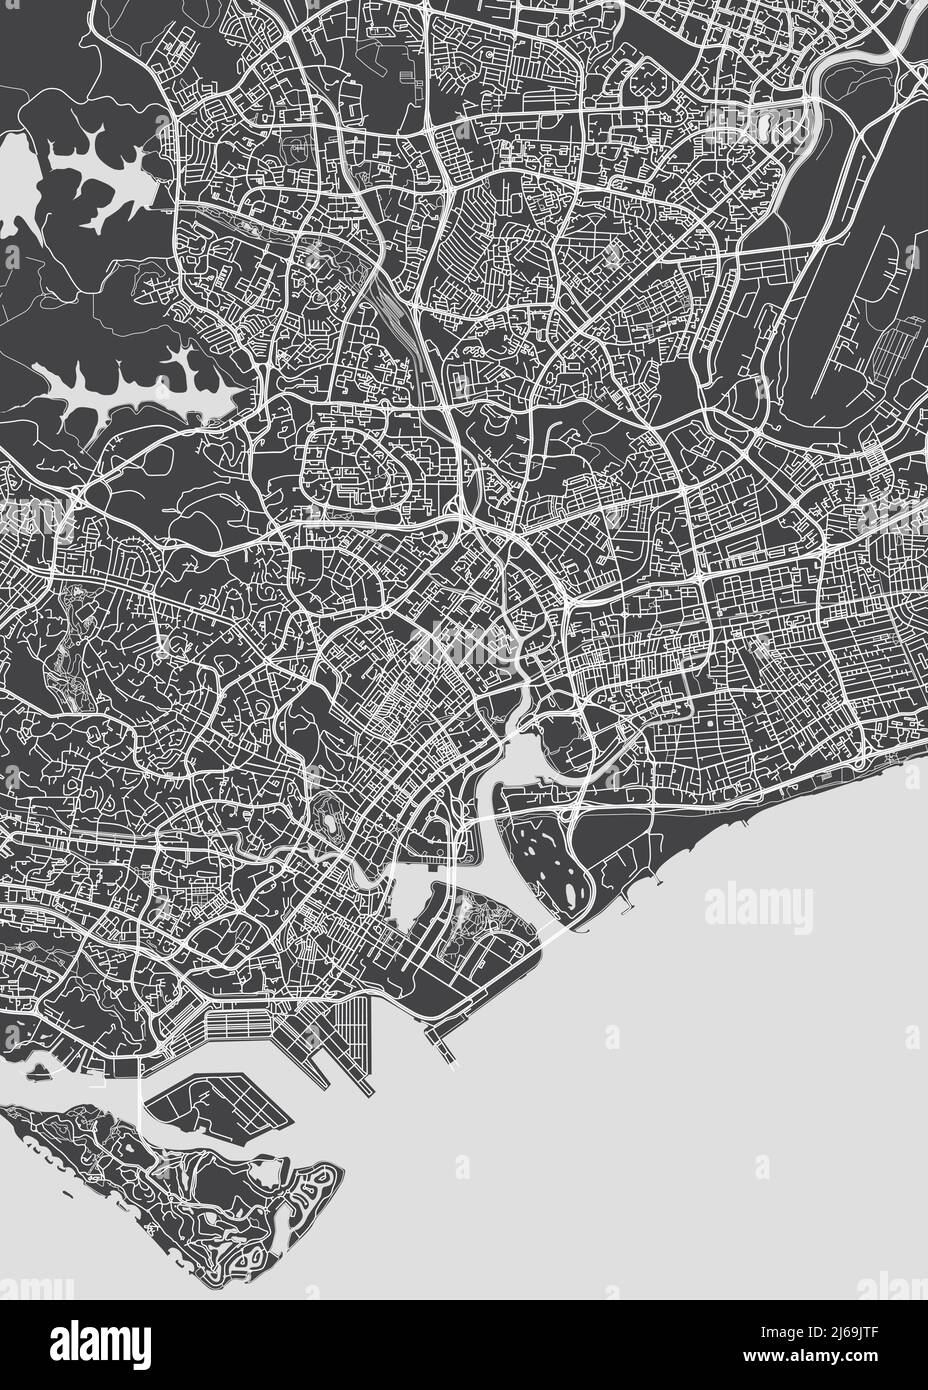 City map Singapore, monochrome detailed plan, vector illustration Stock Vector